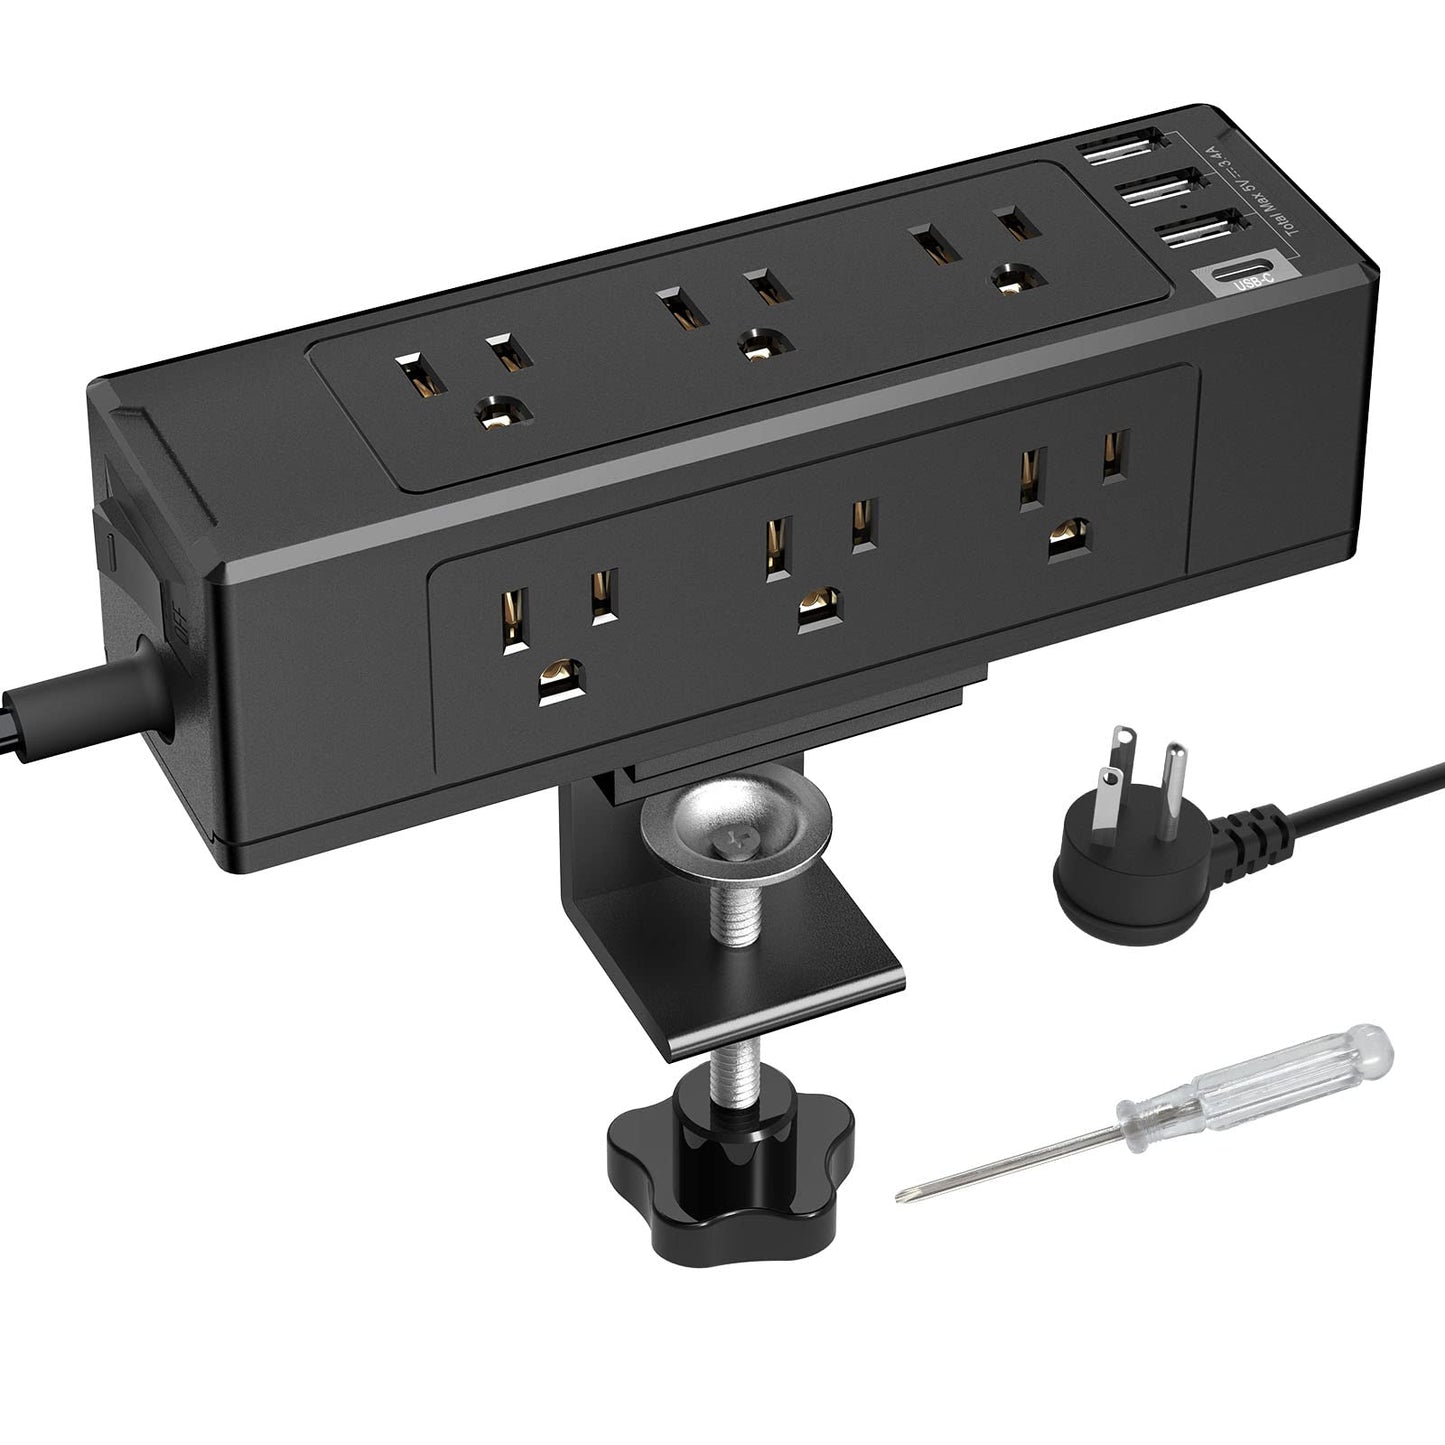 Desk Clamp Power Strip with 9 AC Plugs 4 USB Ports